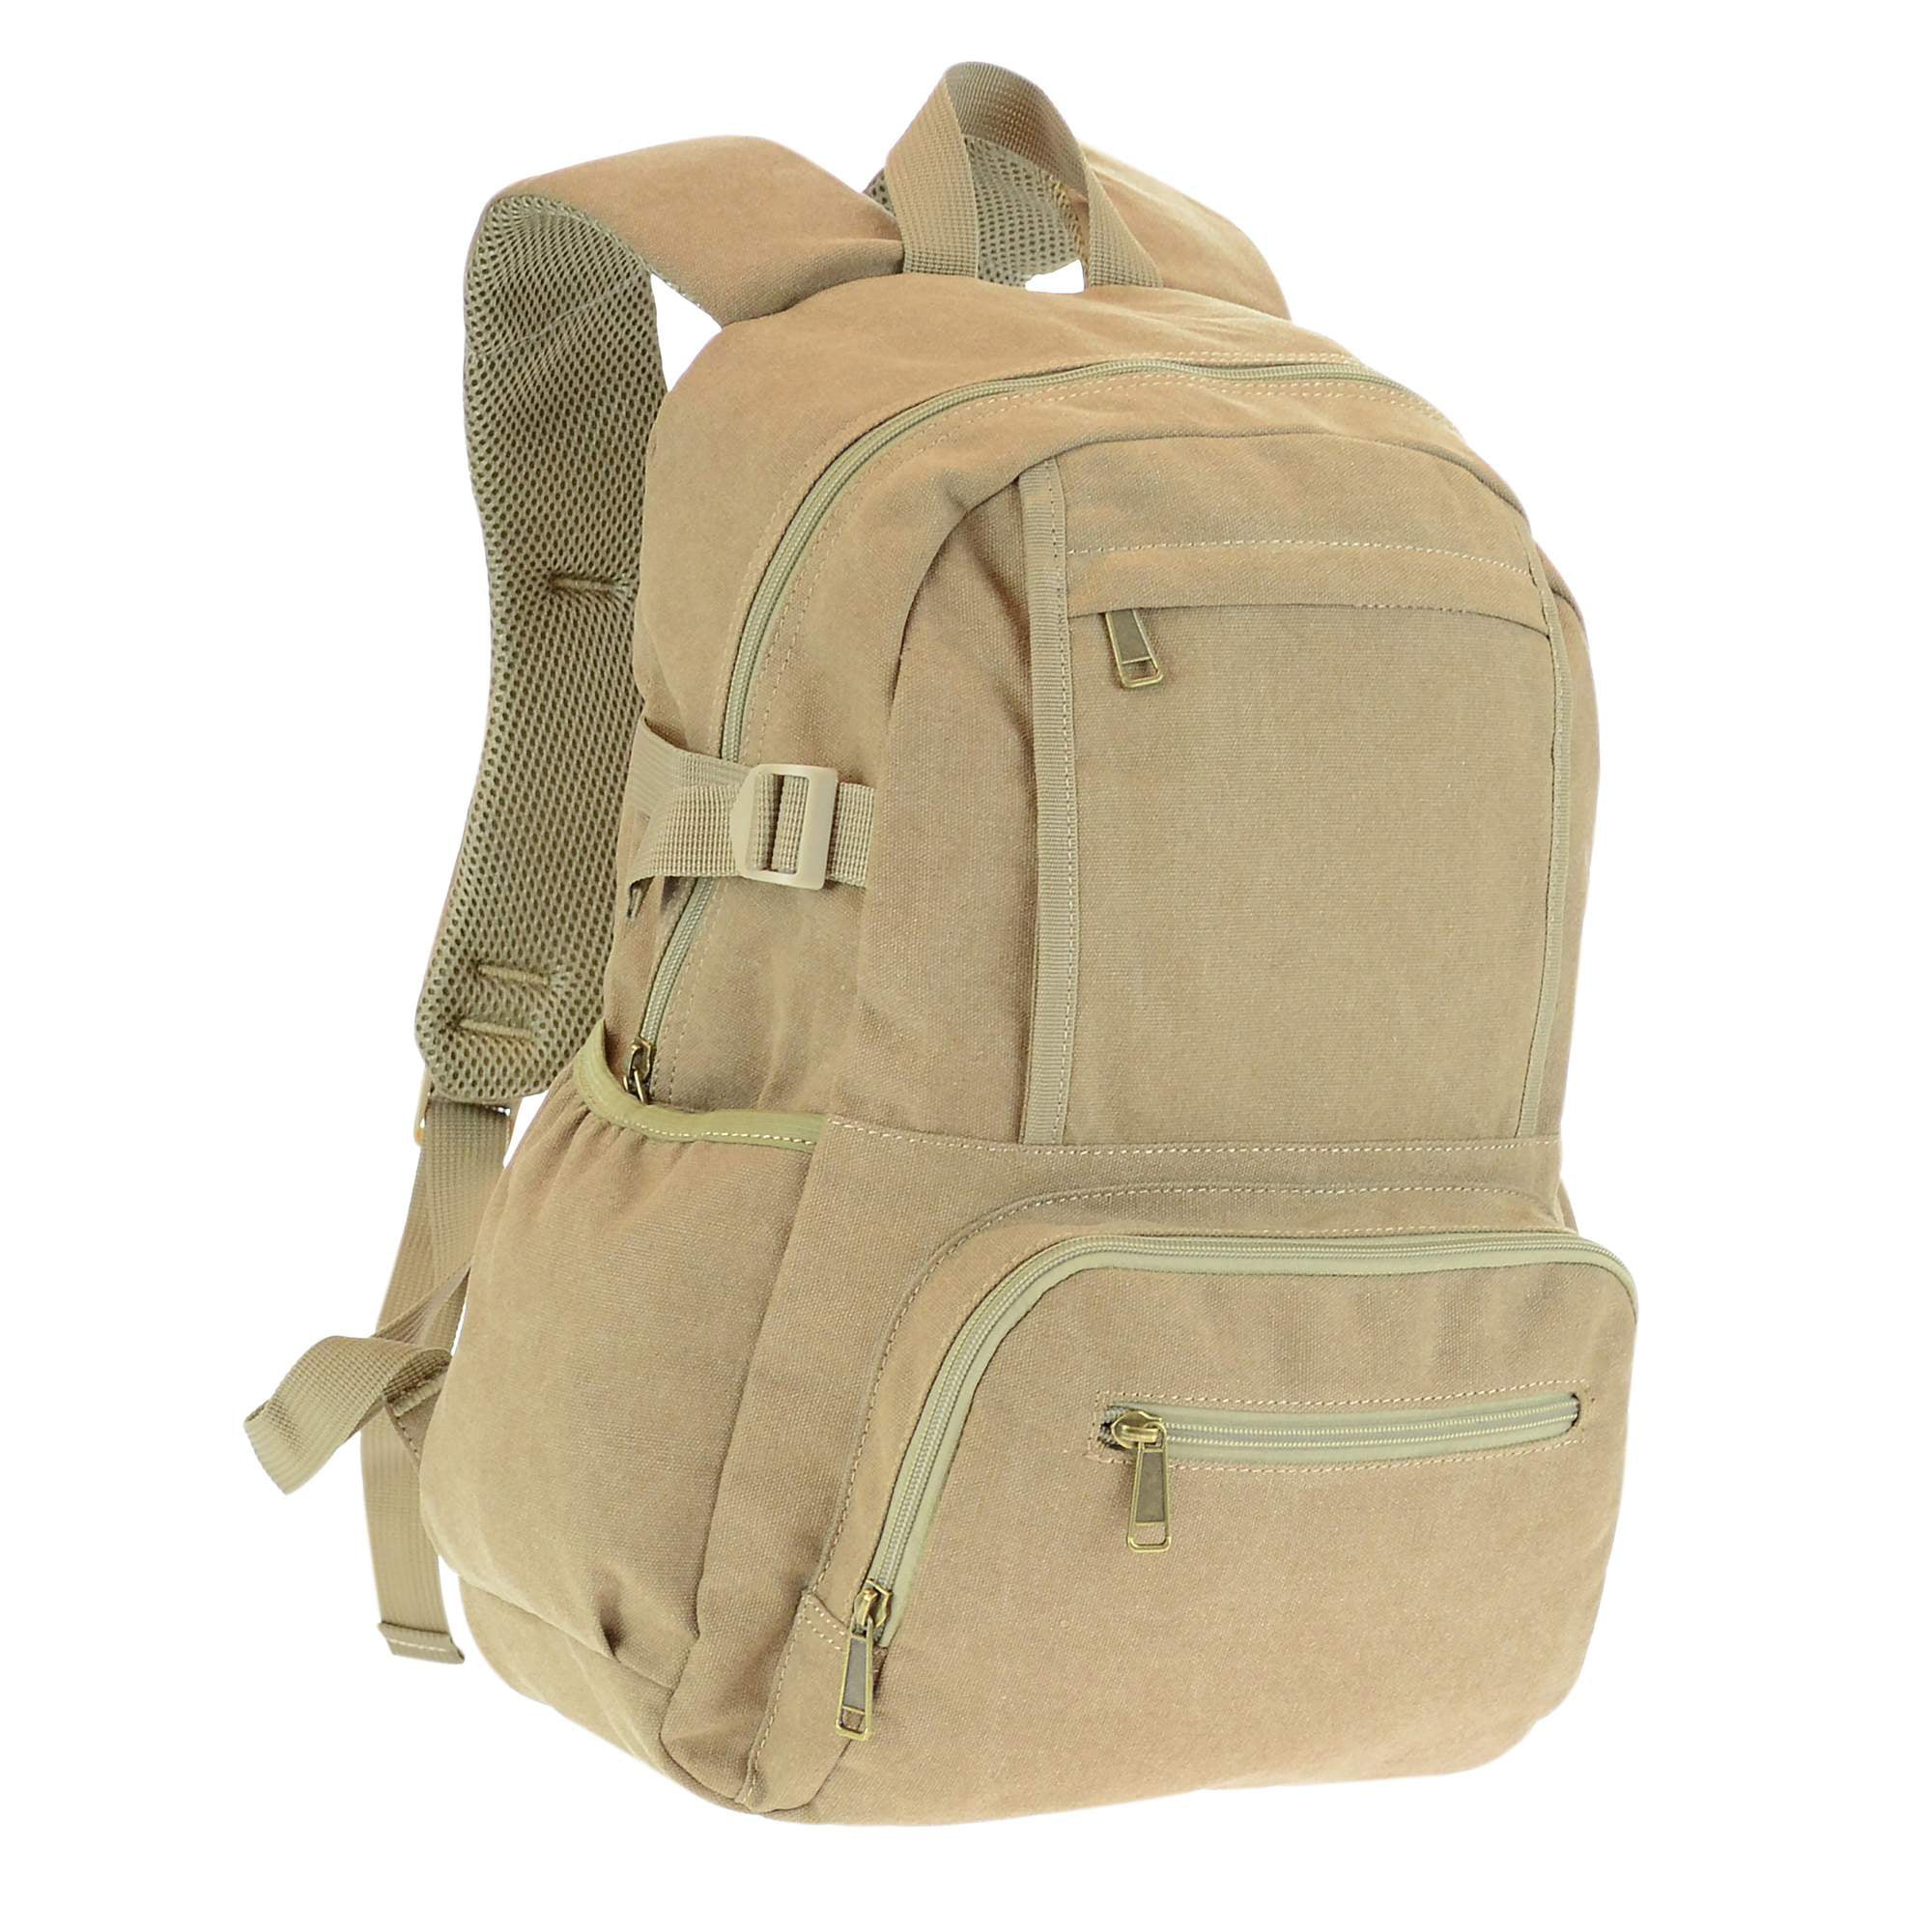 Miller High Life Canvas Backpack Lightweight Travel Daypack Student Rucksack Laptop Backpack. 